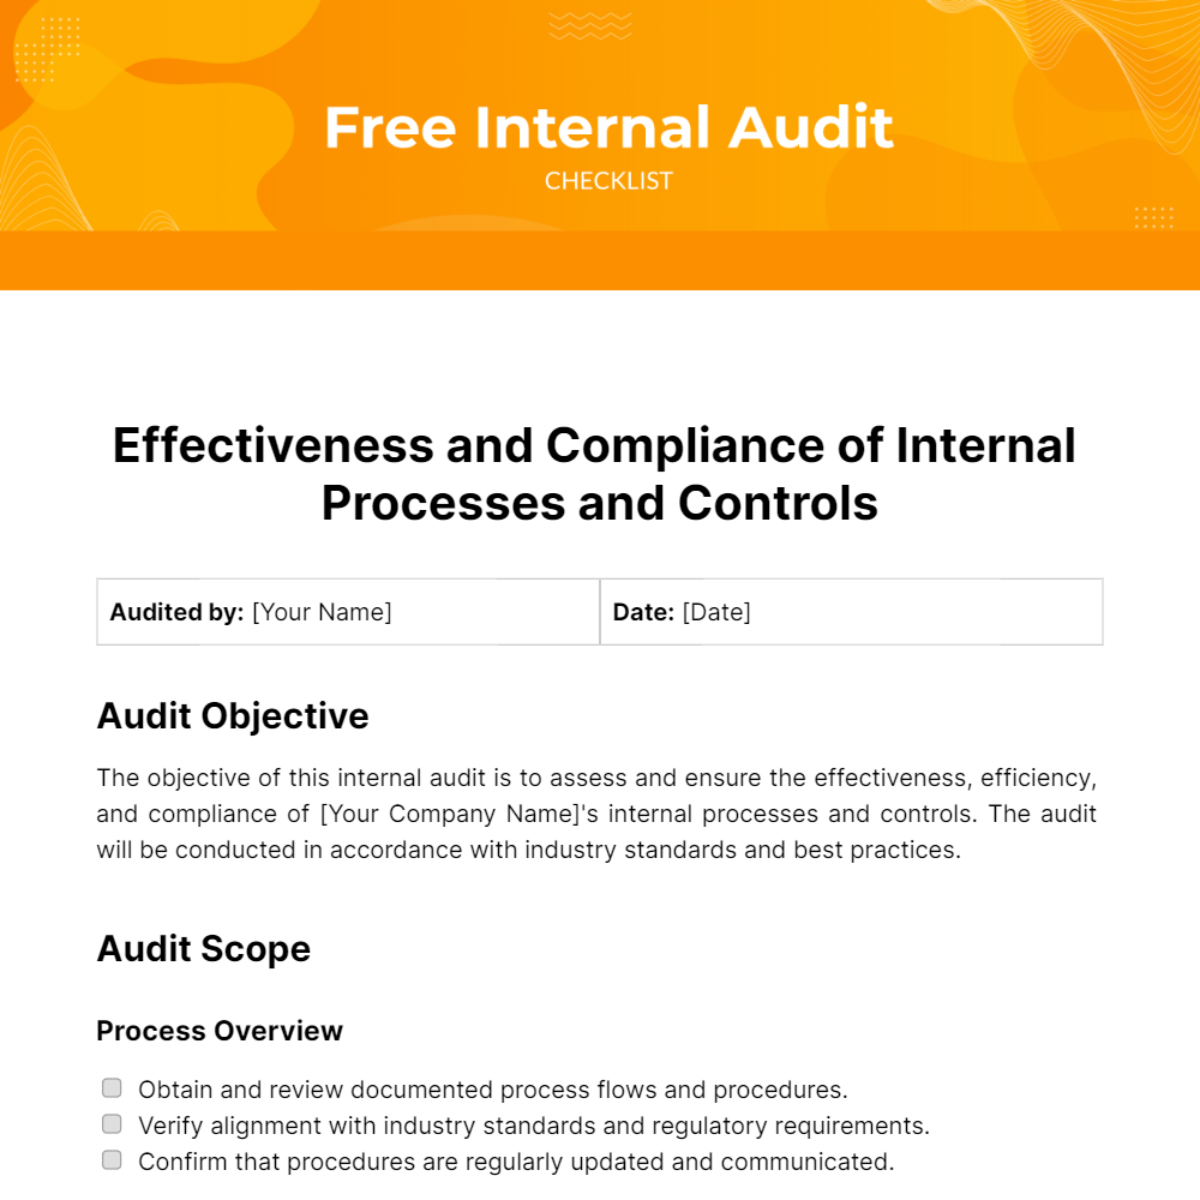 Free Internal Audit Checklist Template